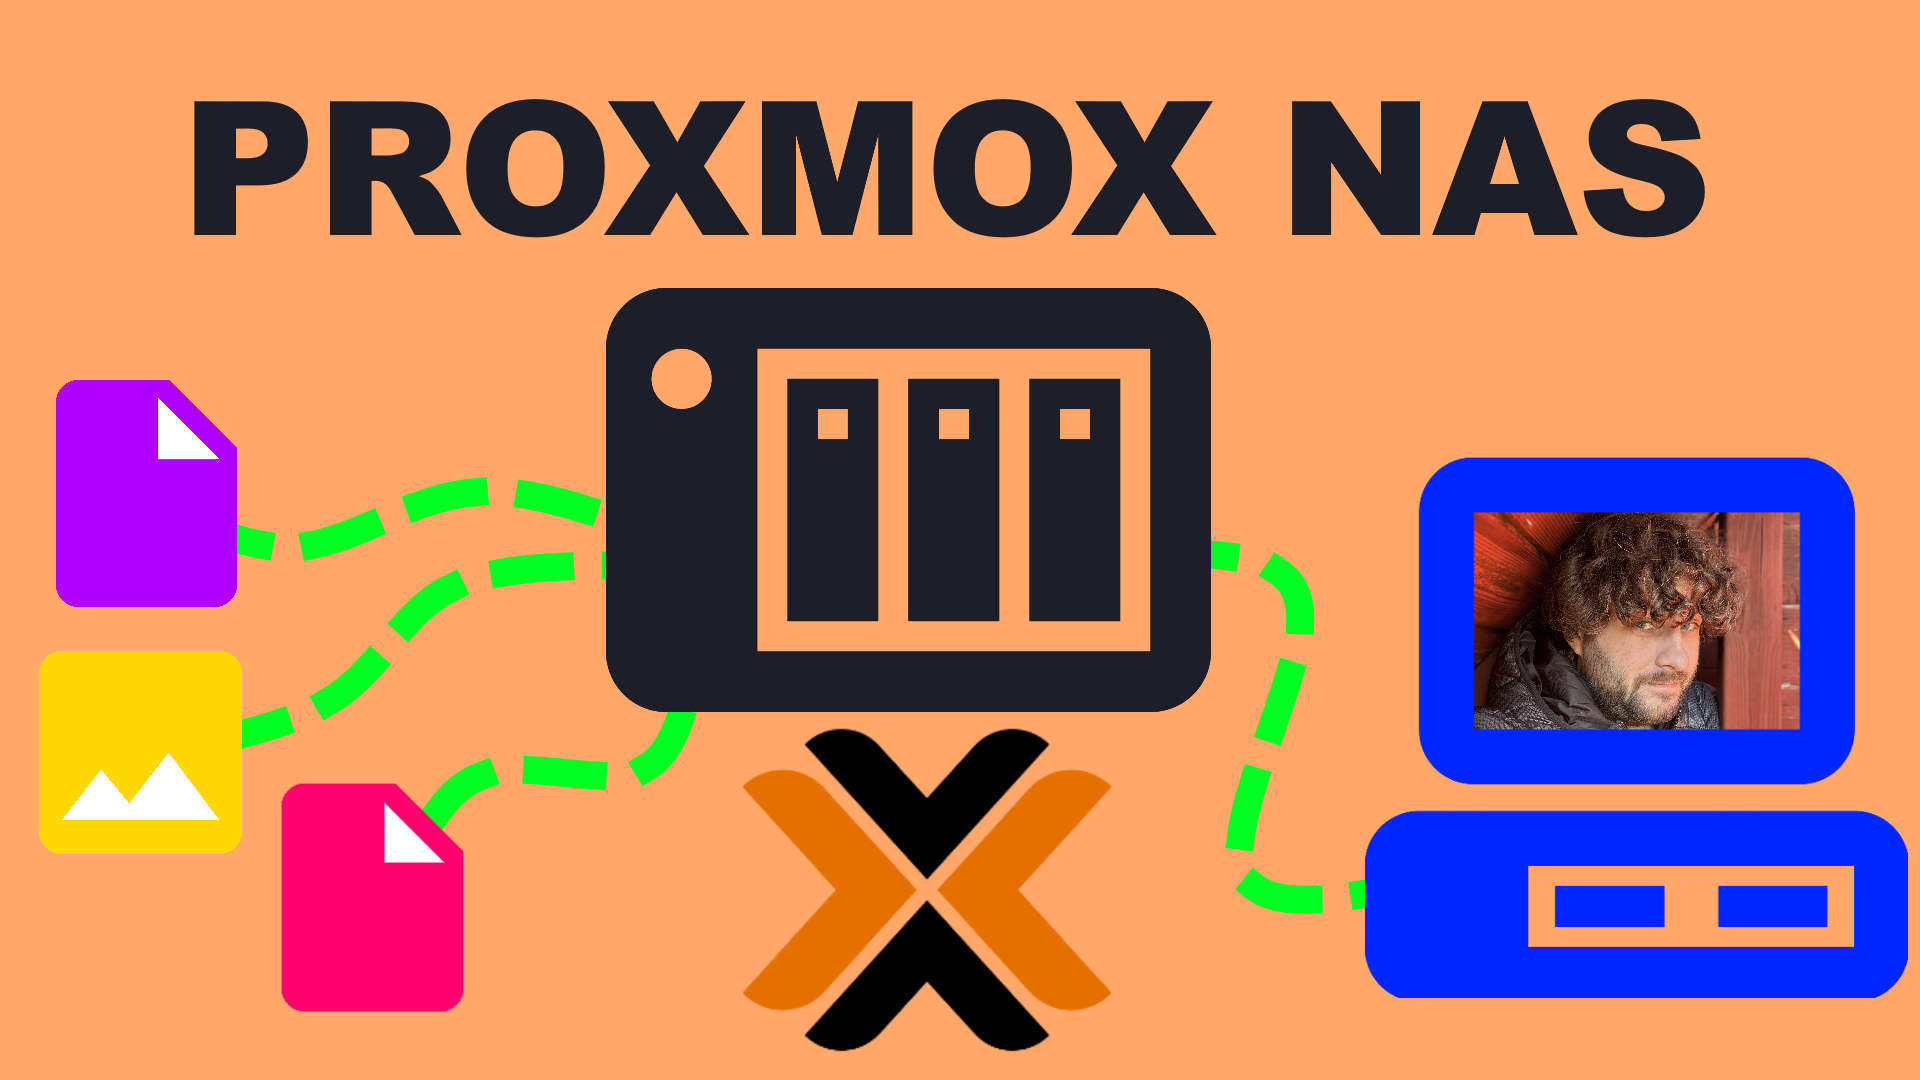 Making Proxmox into a pretty good NAS